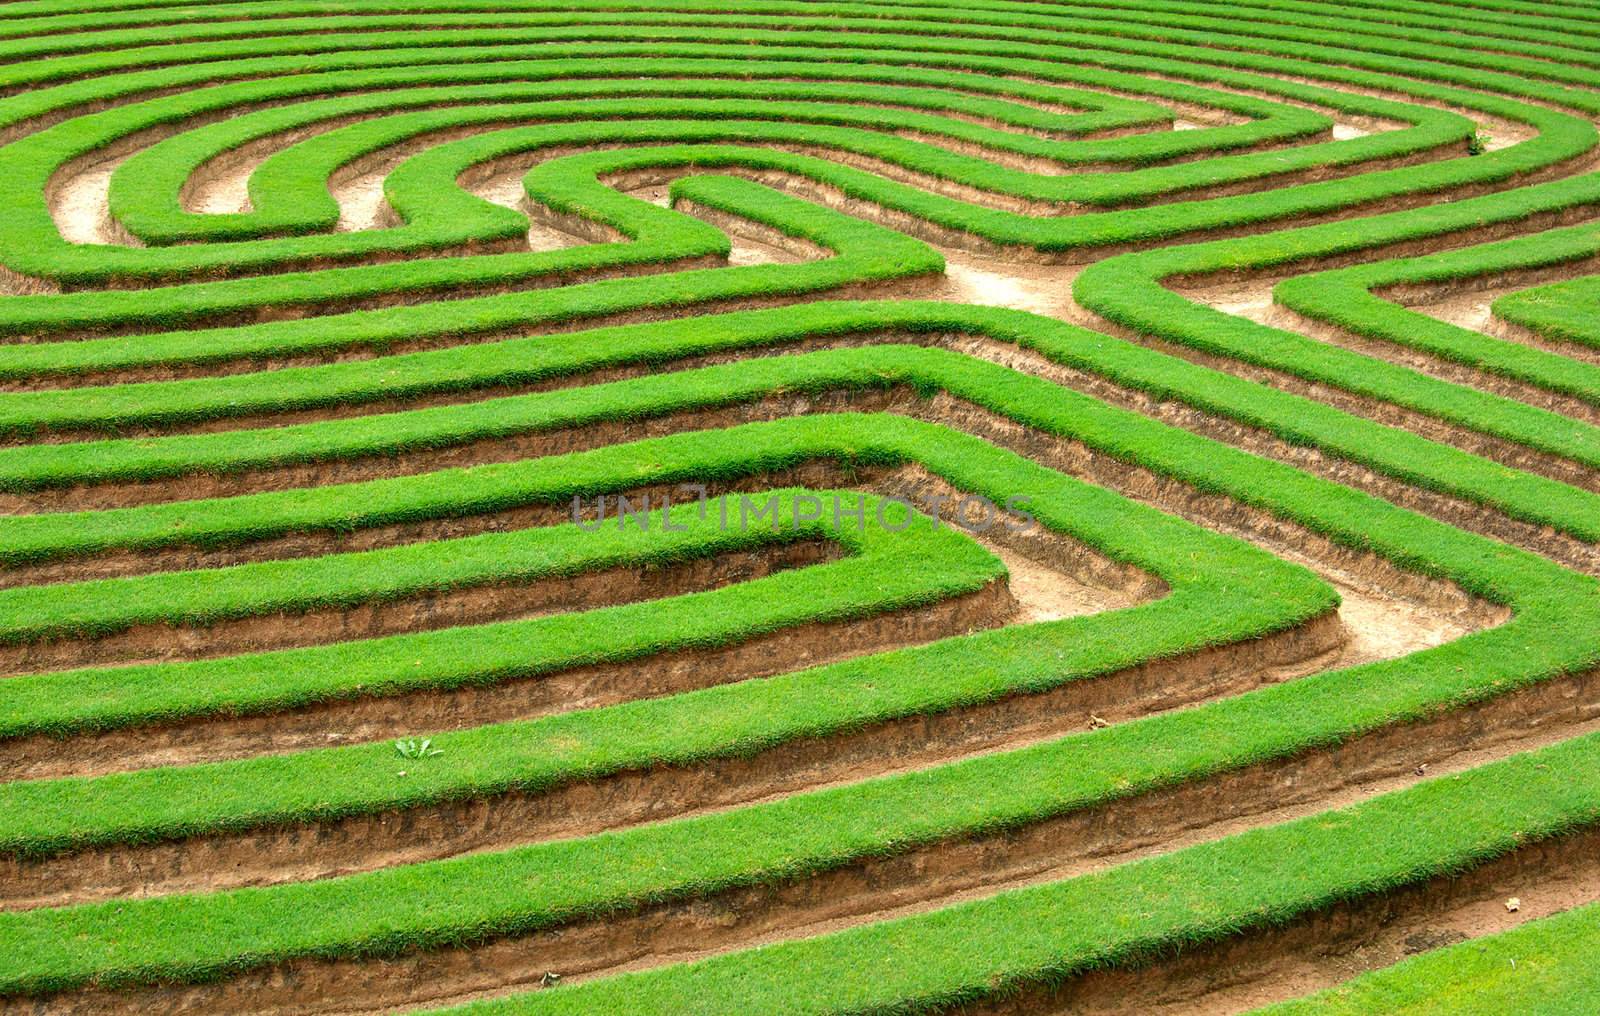 grass lawn cut into a maze like puzzle pattern